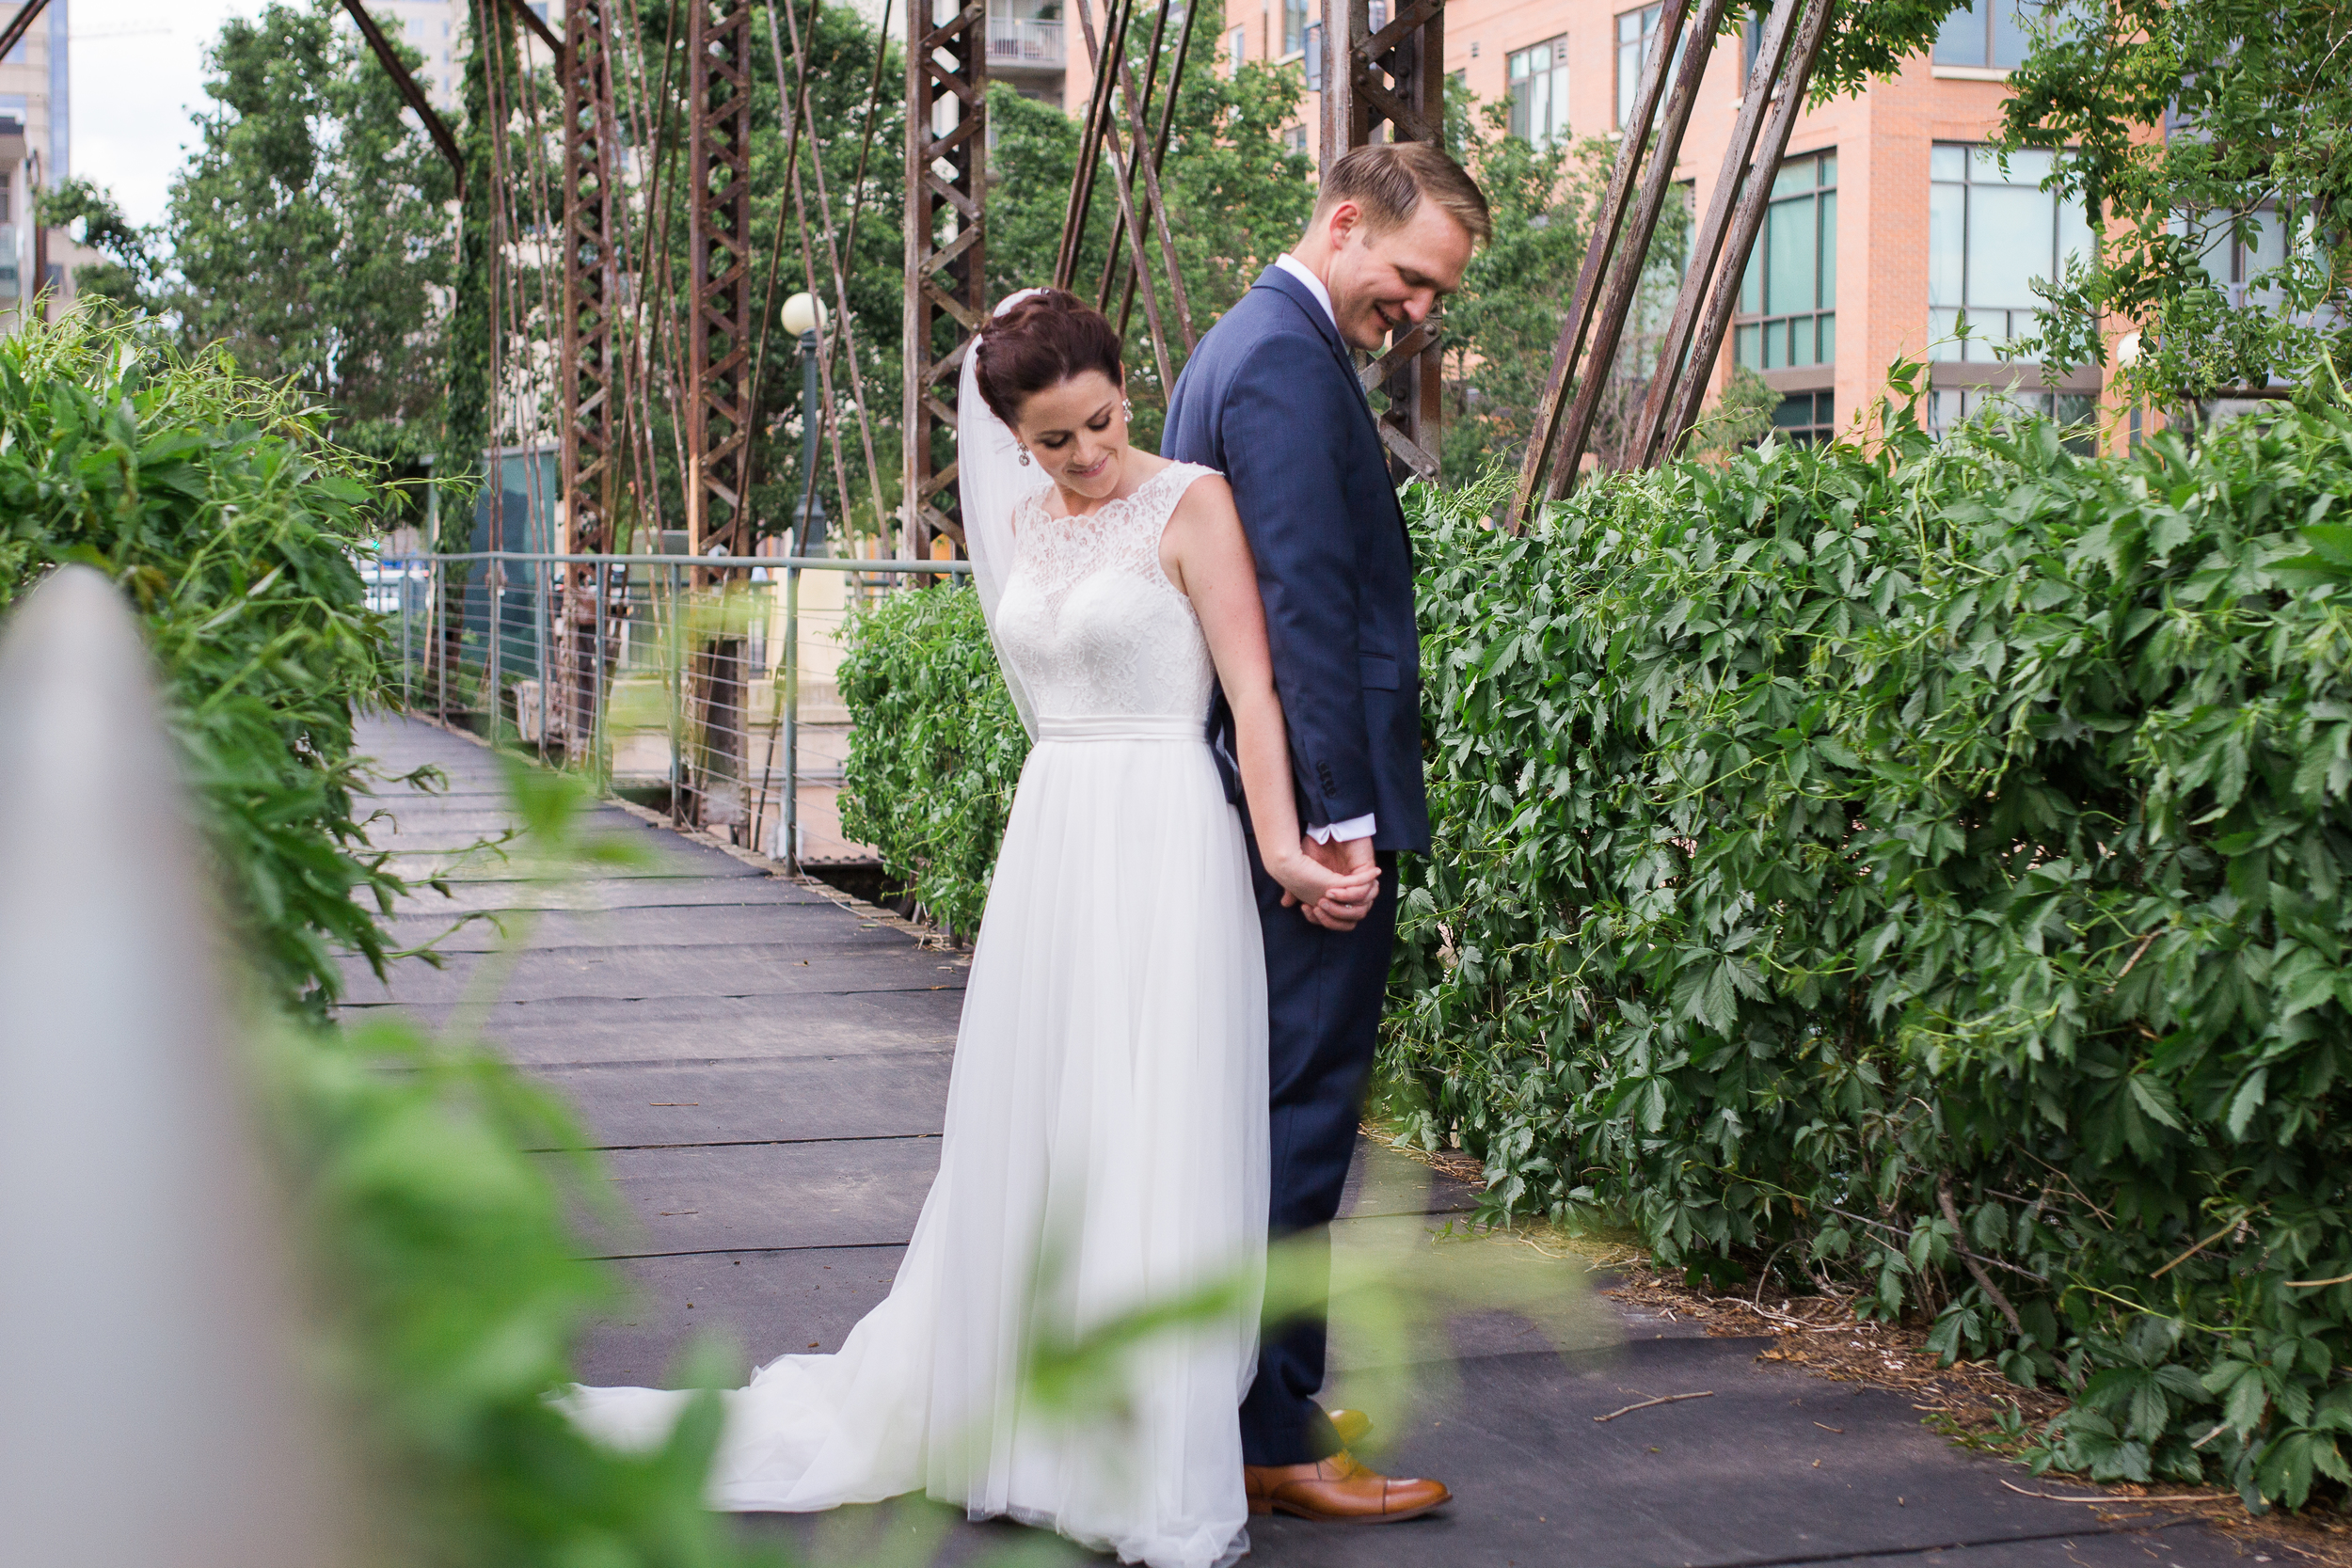 Coohills Wedding Photographer - bride and groom on bridge